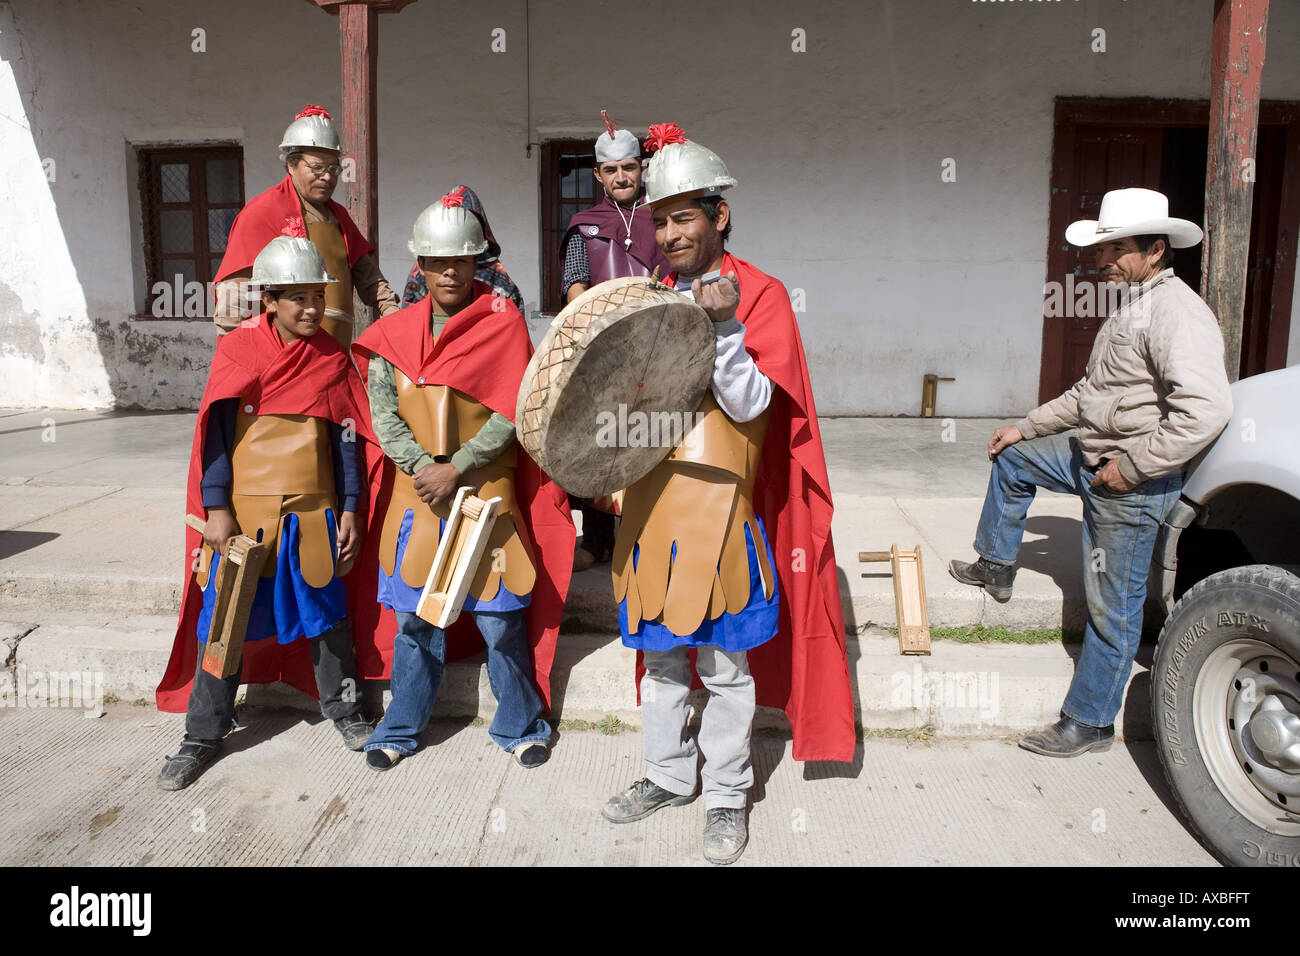 Carichi Mexique soldats romains reenactors dans l'Etat de Chihuahua, Carichi avant de prendre part à des fêtes de Pâques Banque D'Images